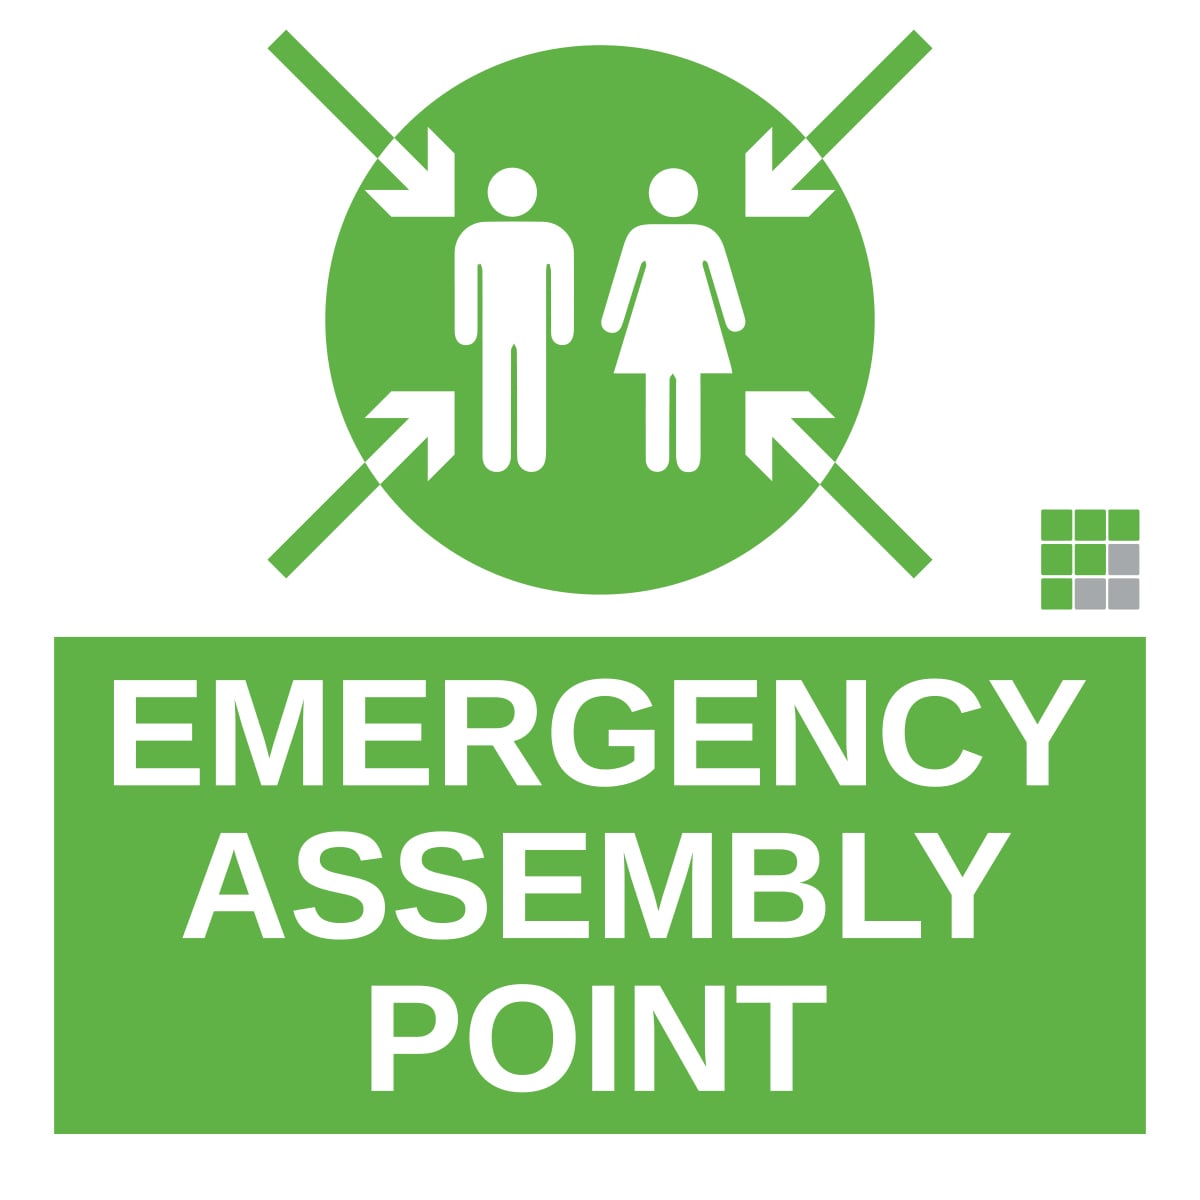 emergency assembly point - 1x1ft.jpg